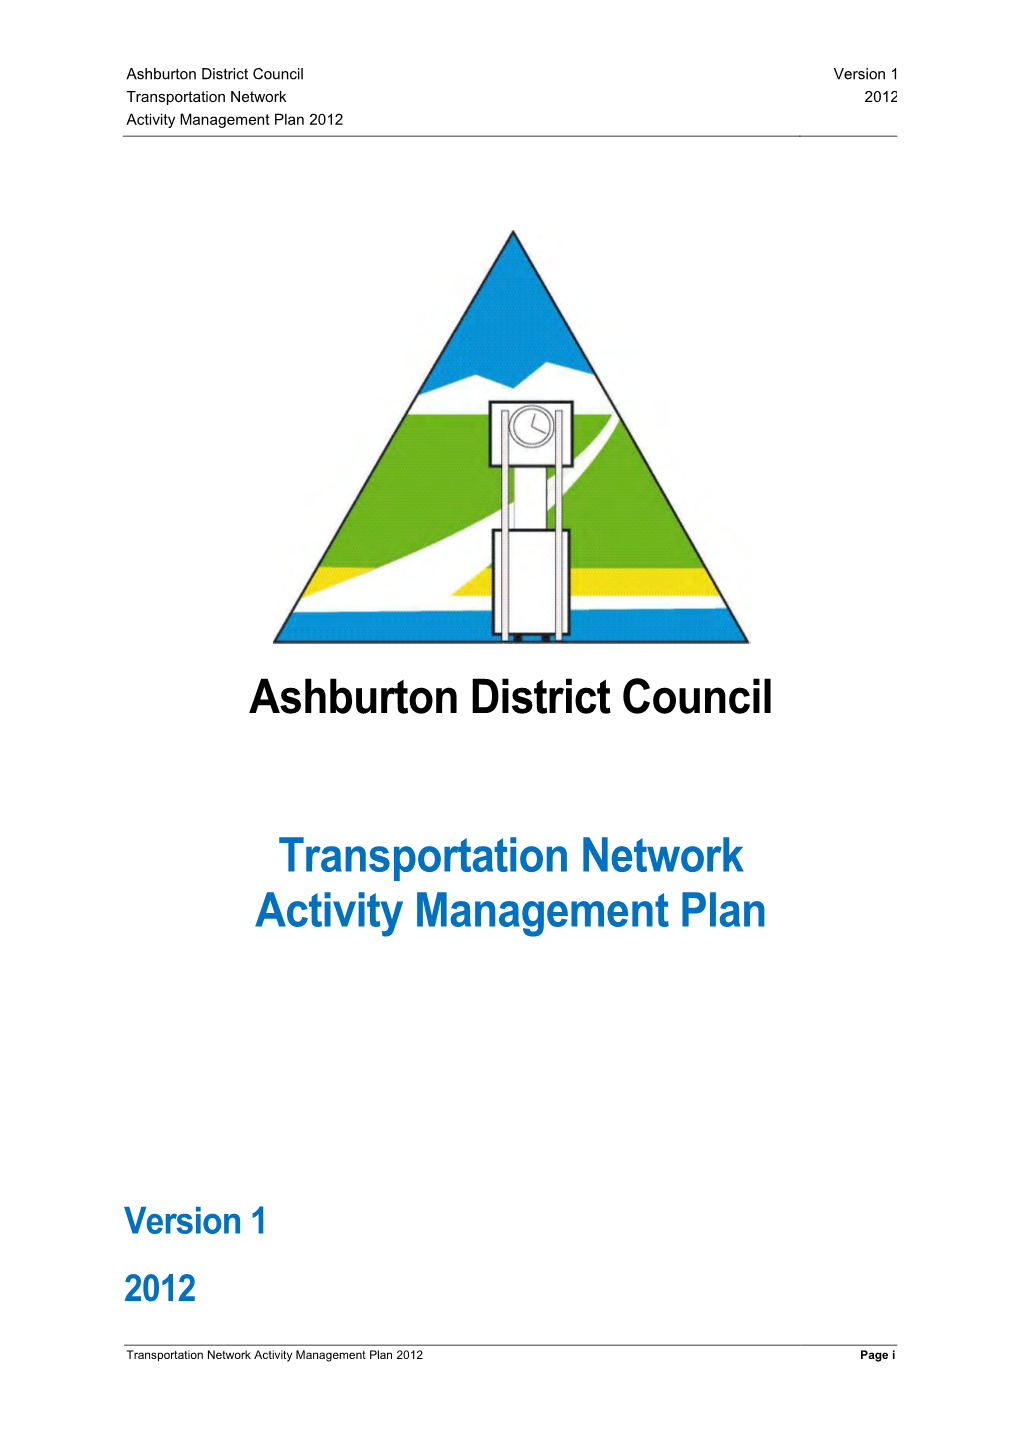 Read the Transportation Activity Management Plan